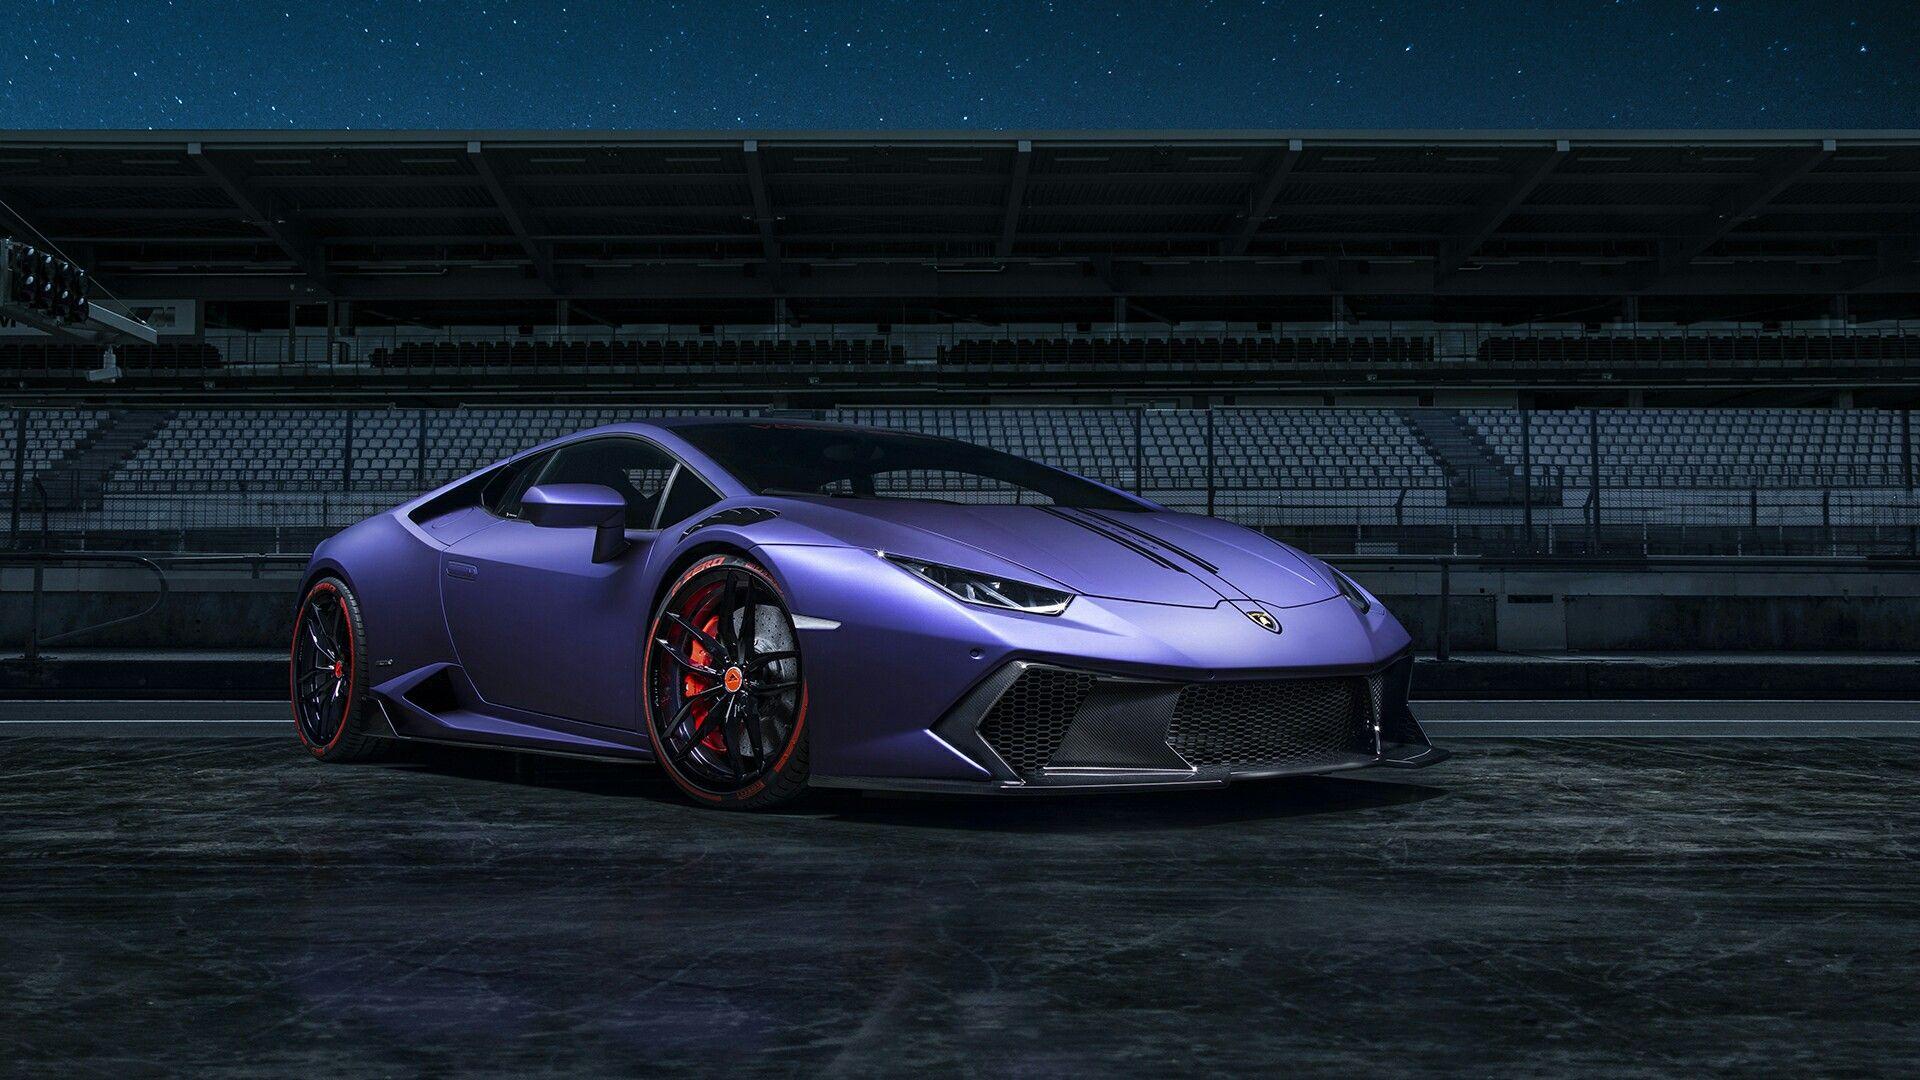 Lamborghini Huracán At Night Wallpaper. Wallpaper Studio 10. Tens